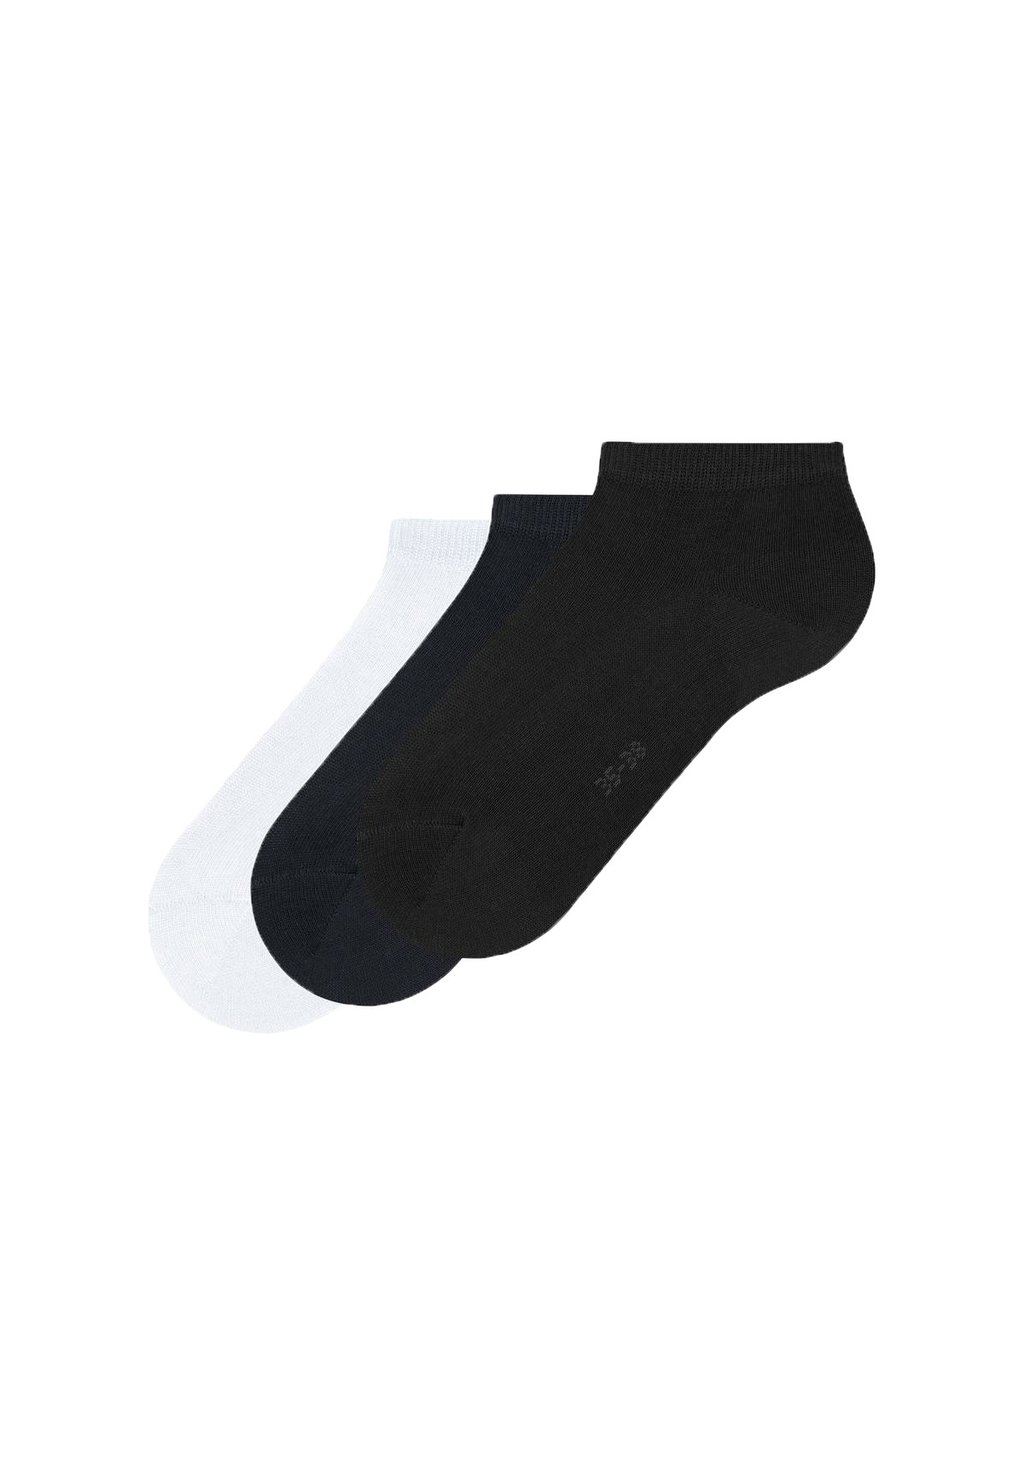 Носки FALKE letter style socks do not disturb i m gaming socks women men funny printed happy casual cotton couple socks dropshipping